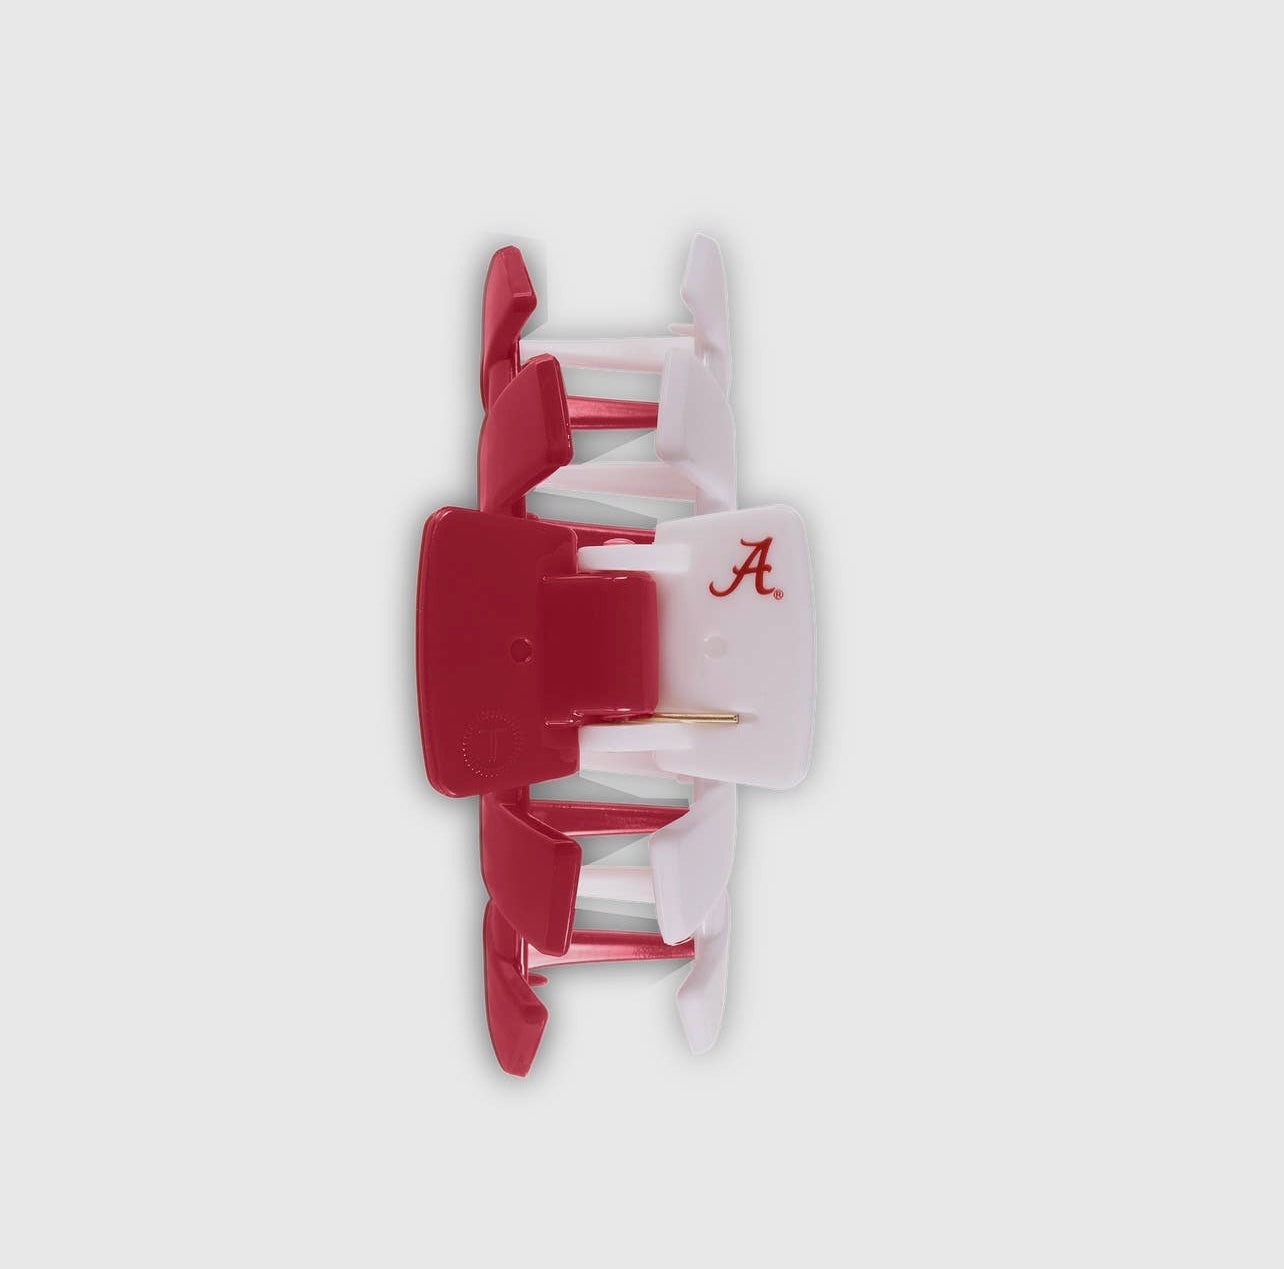 University of Alabama Collegiate Teletie Claw Clip in crimson and white. Top view.